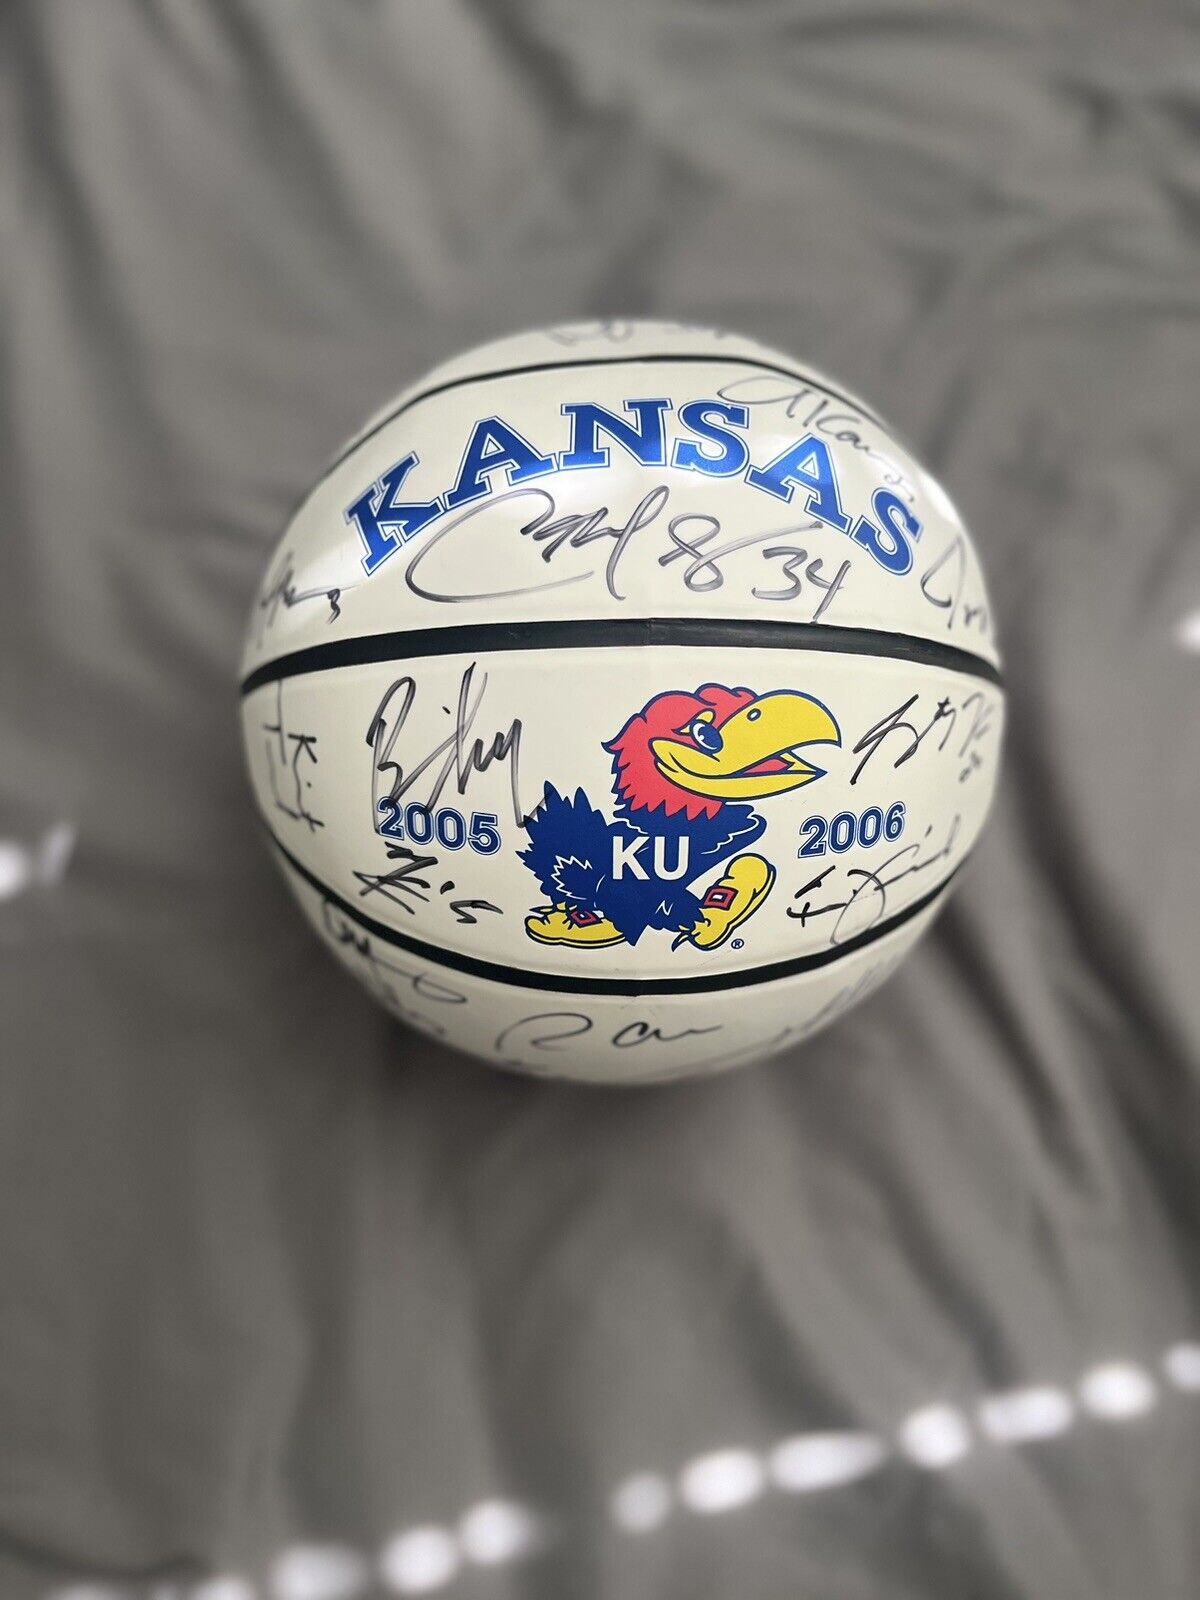 2005-2006 Kansas Jayhawks sports memorabilia signed